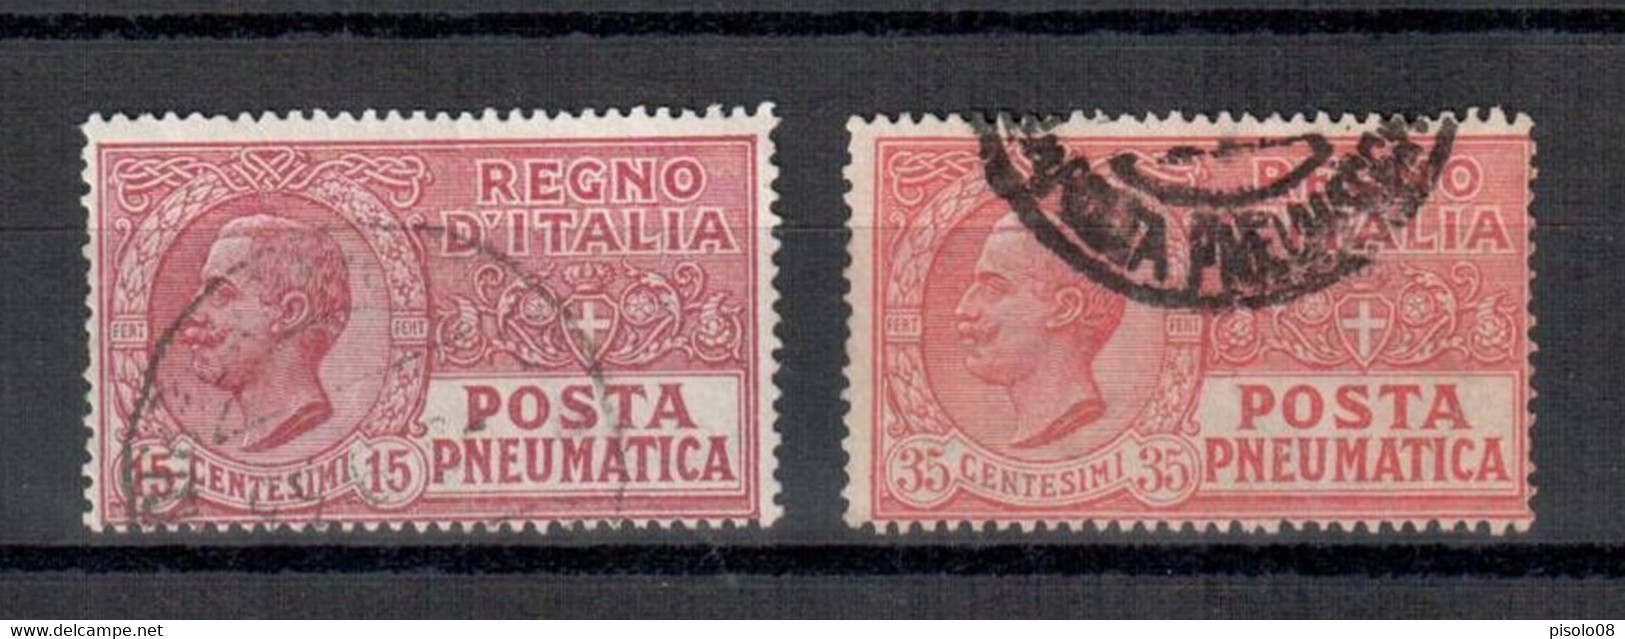 REGNO 1927-28 POSTA PNEUMATICA USATA - Pneumatic Mail